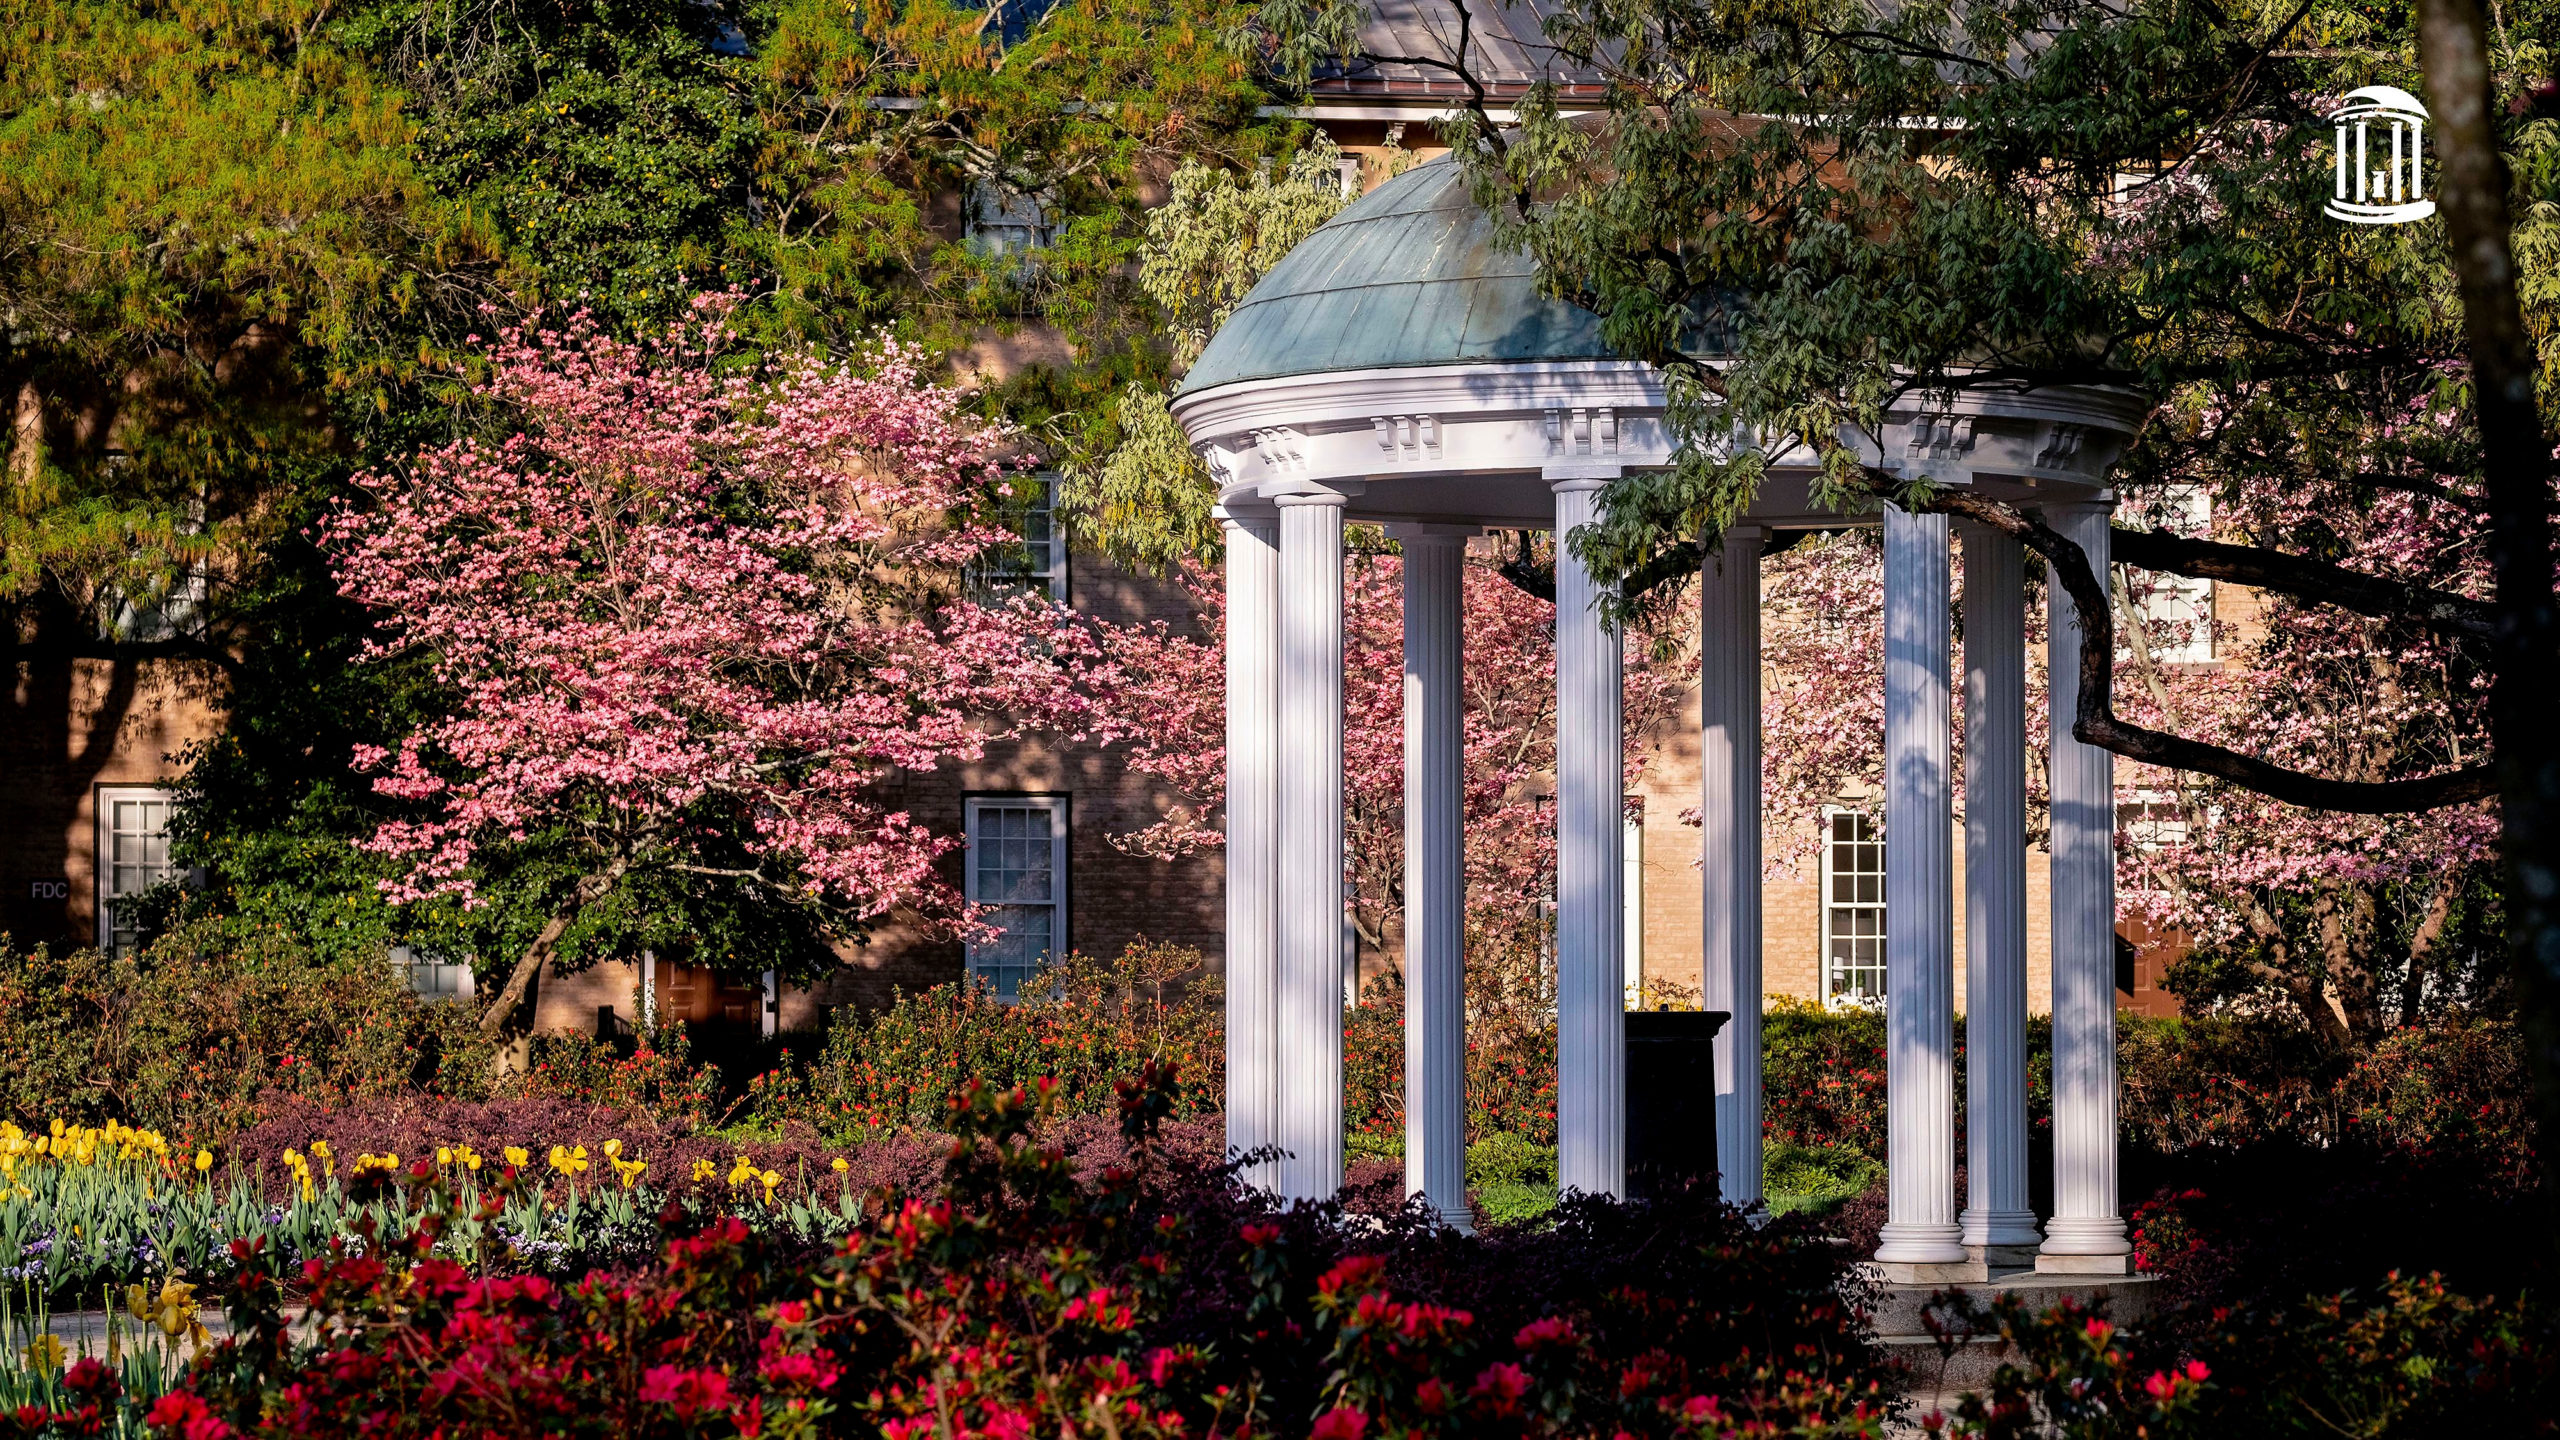 Campus scene at the University of North Carolina at Chapel Hill.